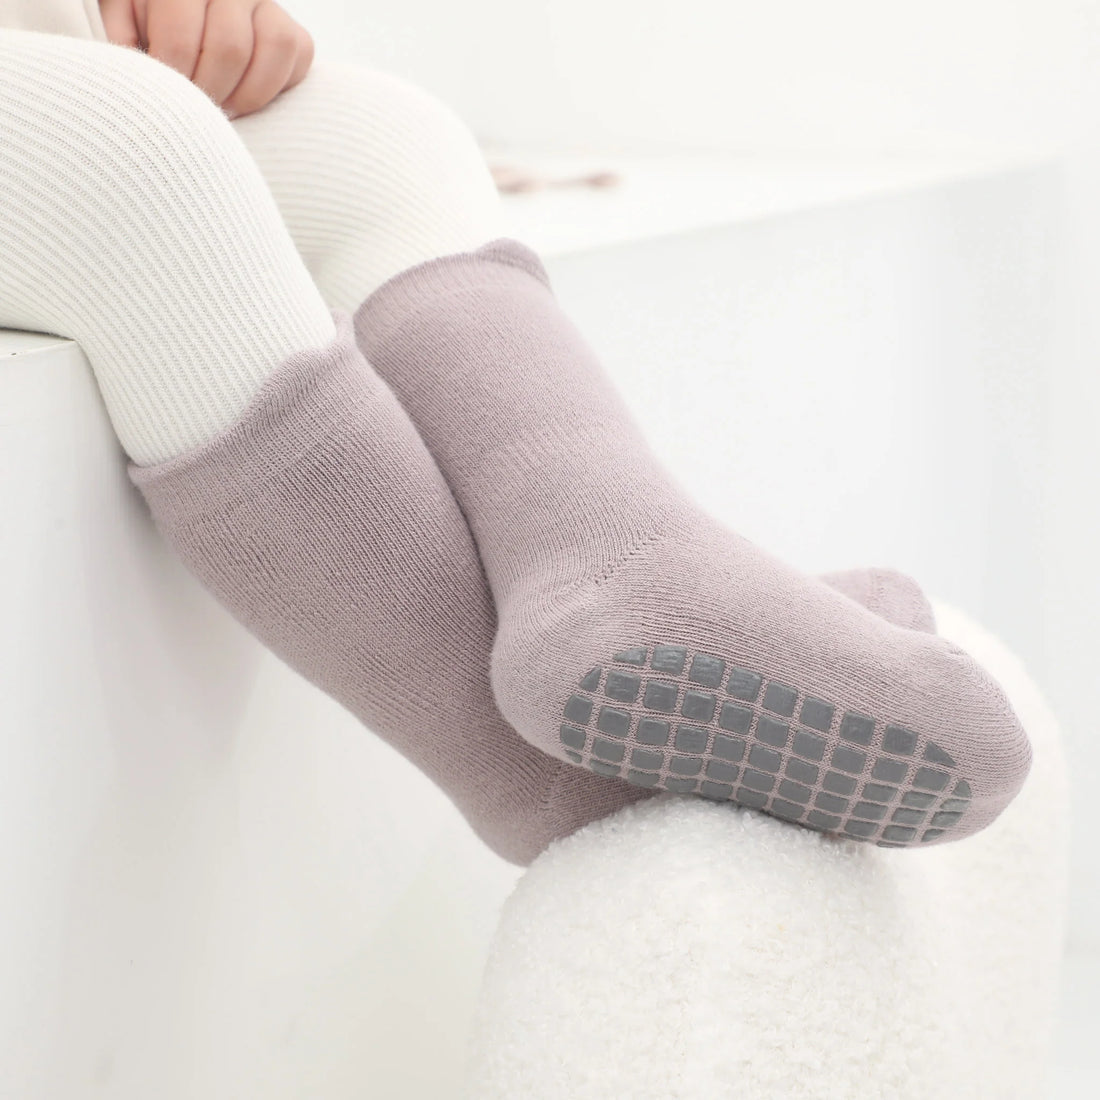 Is it worth buying grip socks?